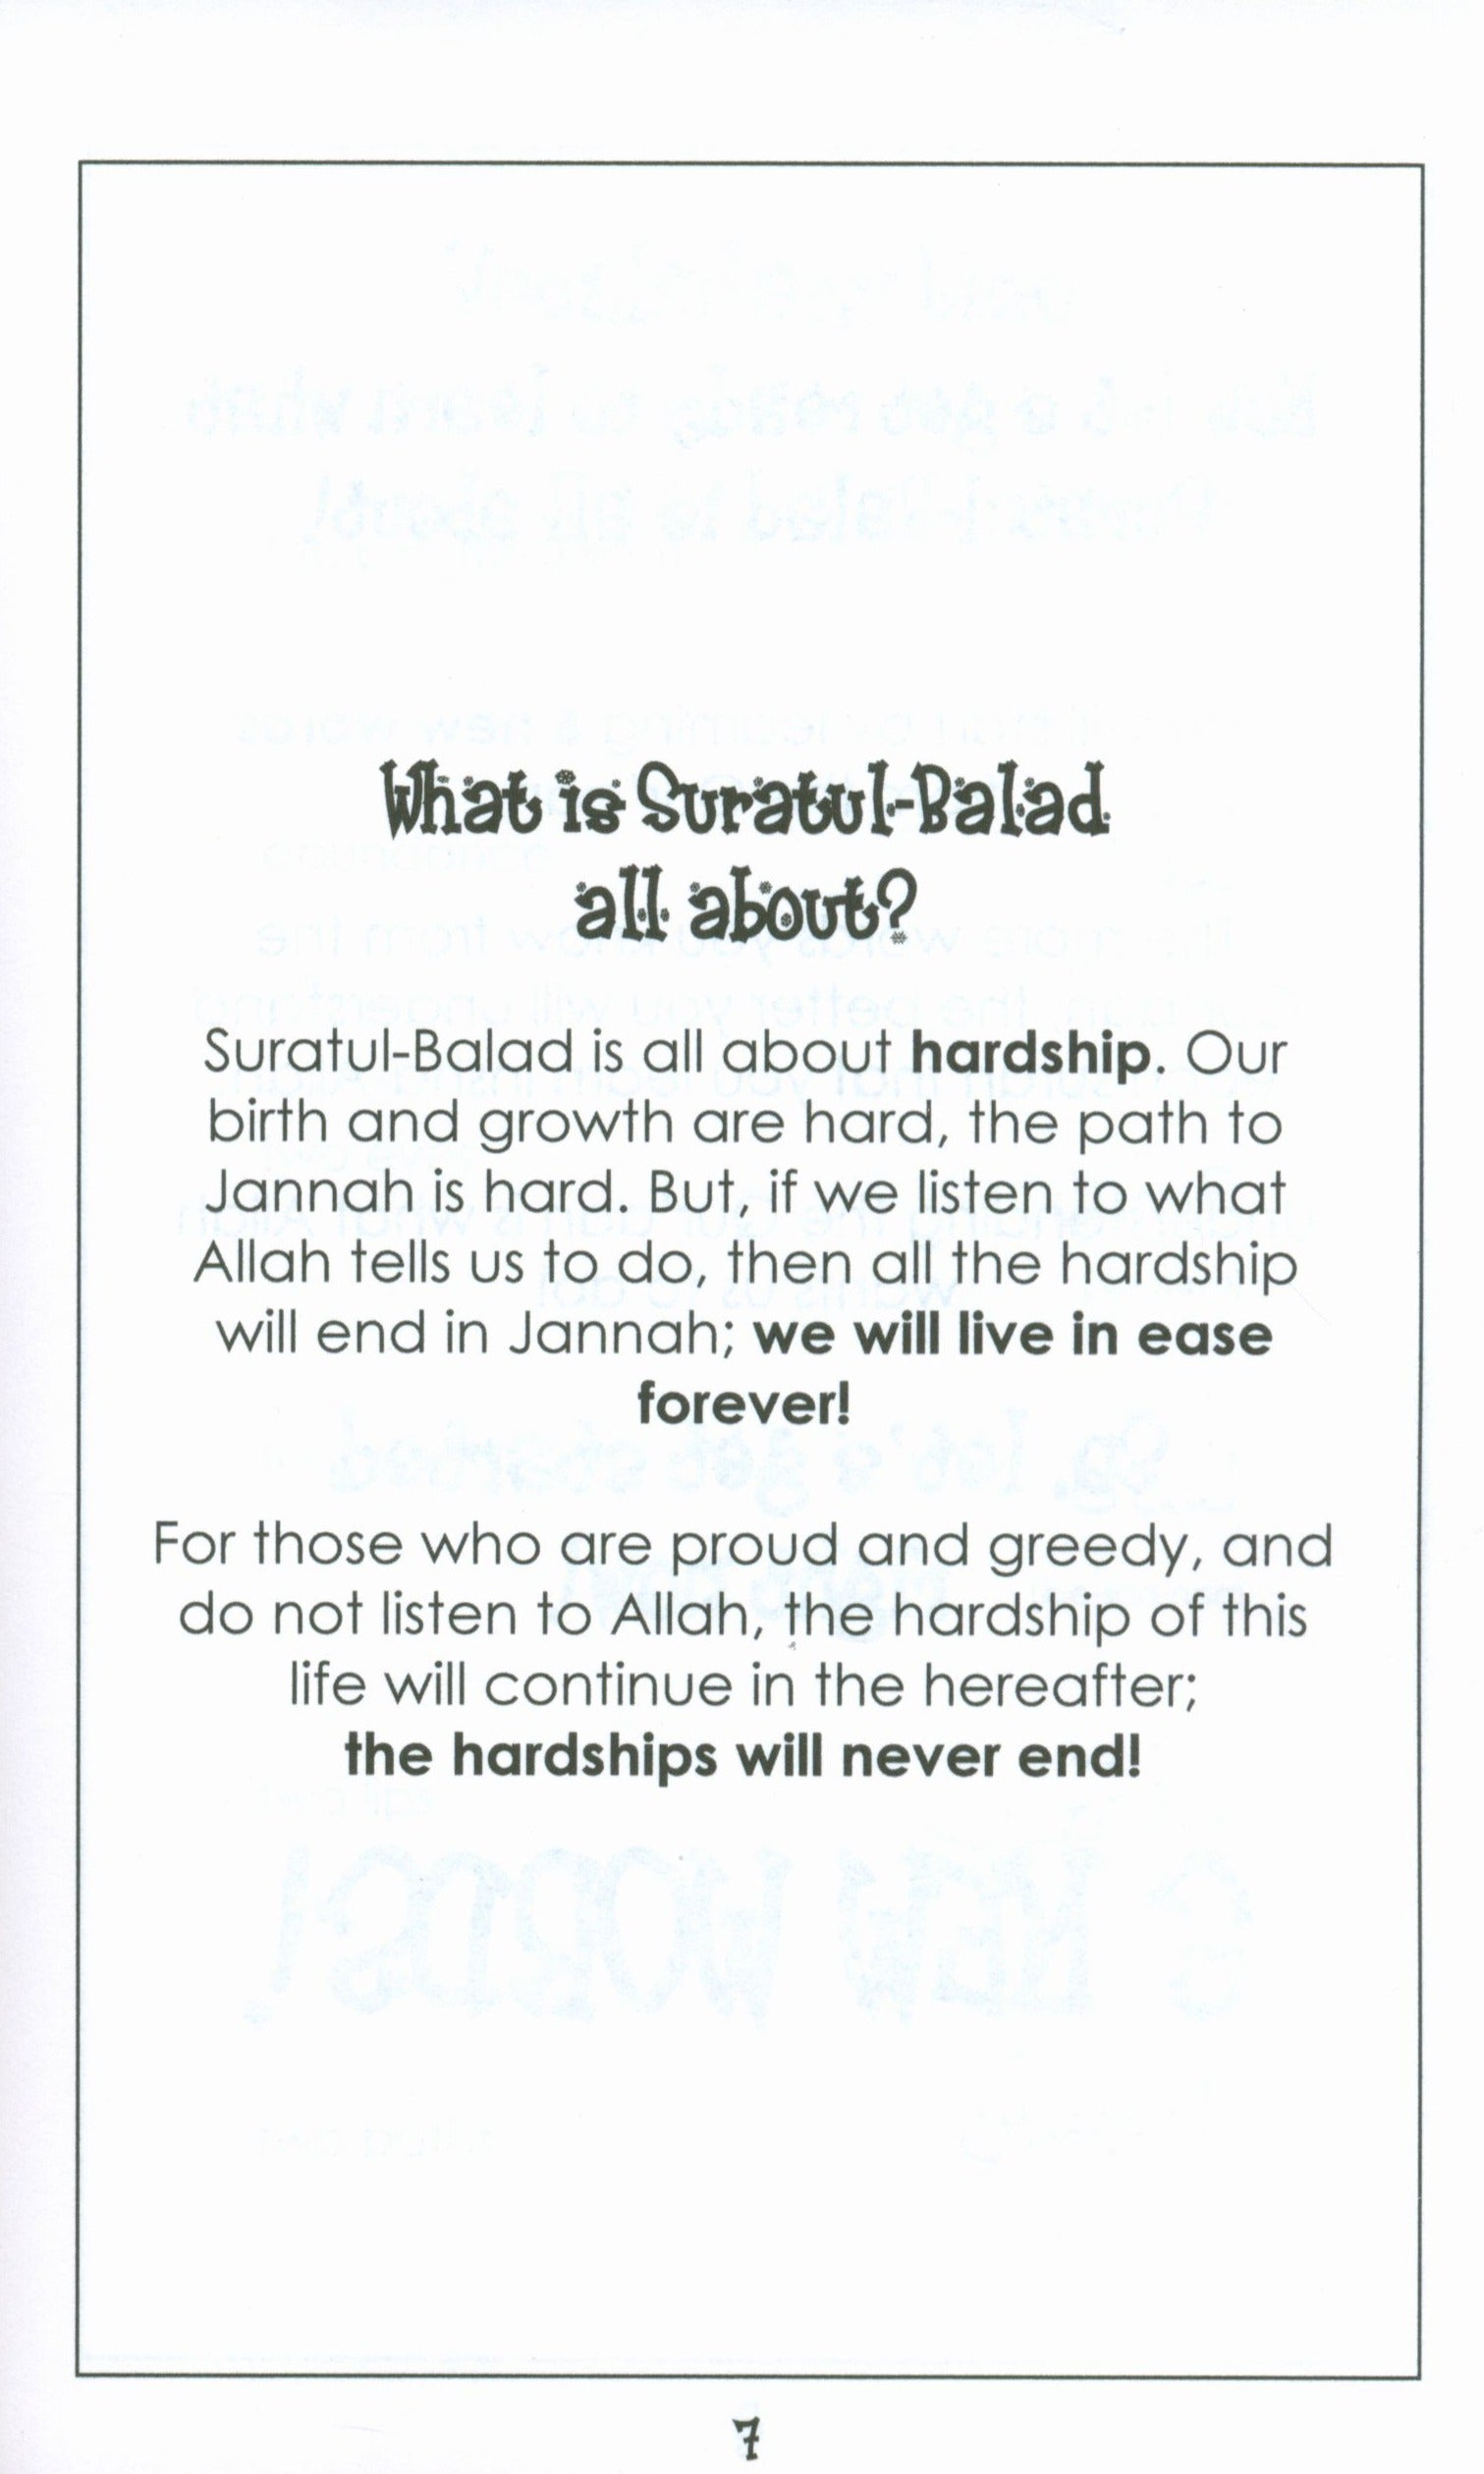 Mini Tafseer Book Suratul Balad (Surah 90)